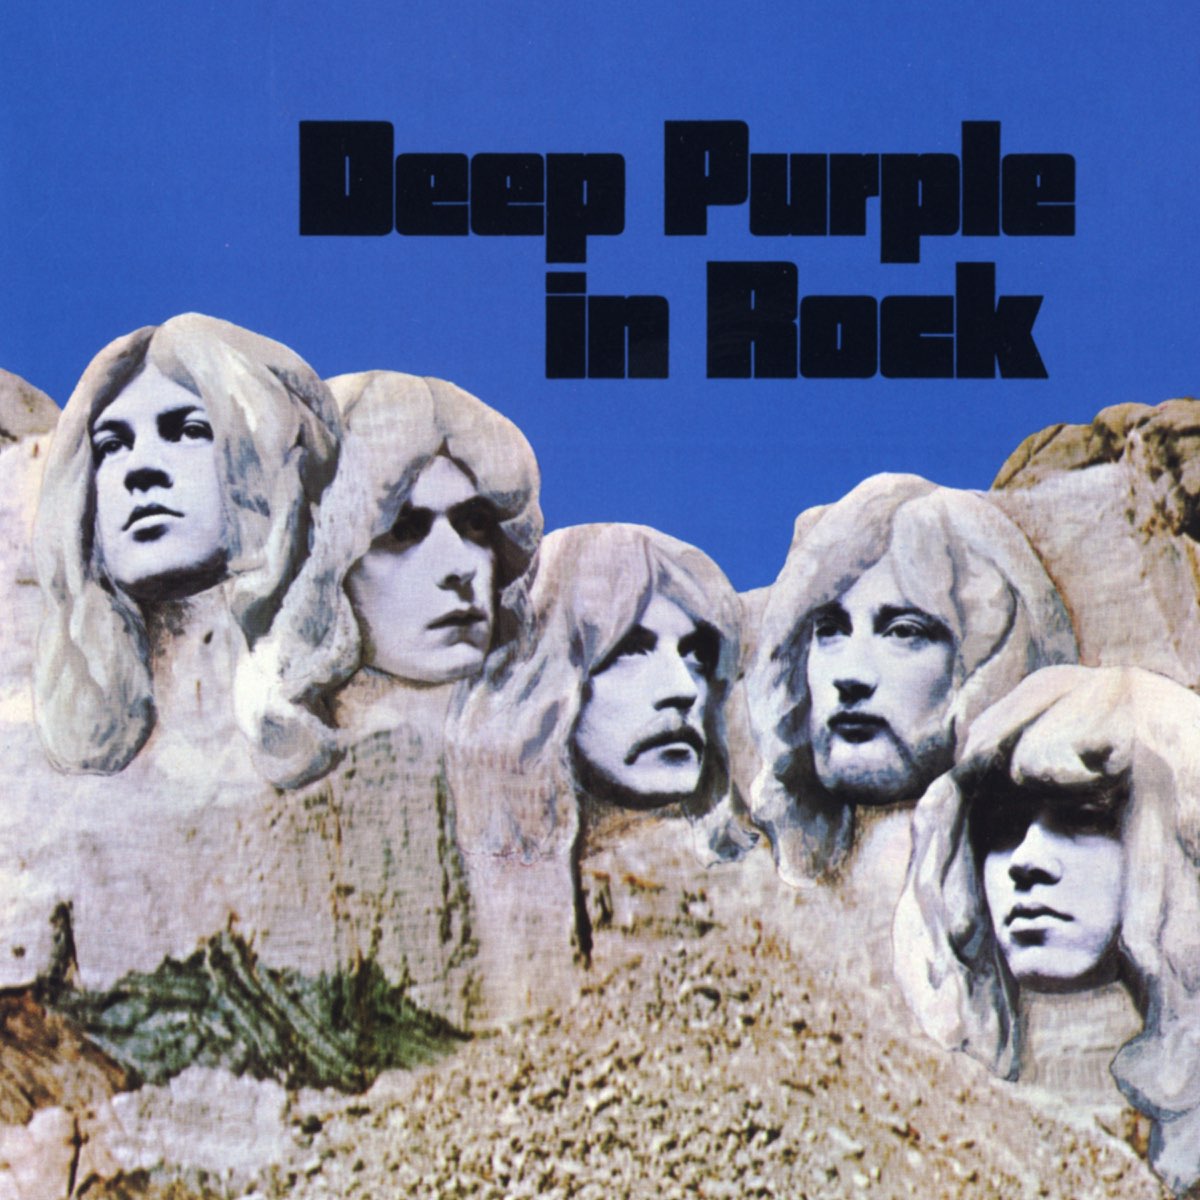 Music Milestones: Deep Purple in Rock [DVD]